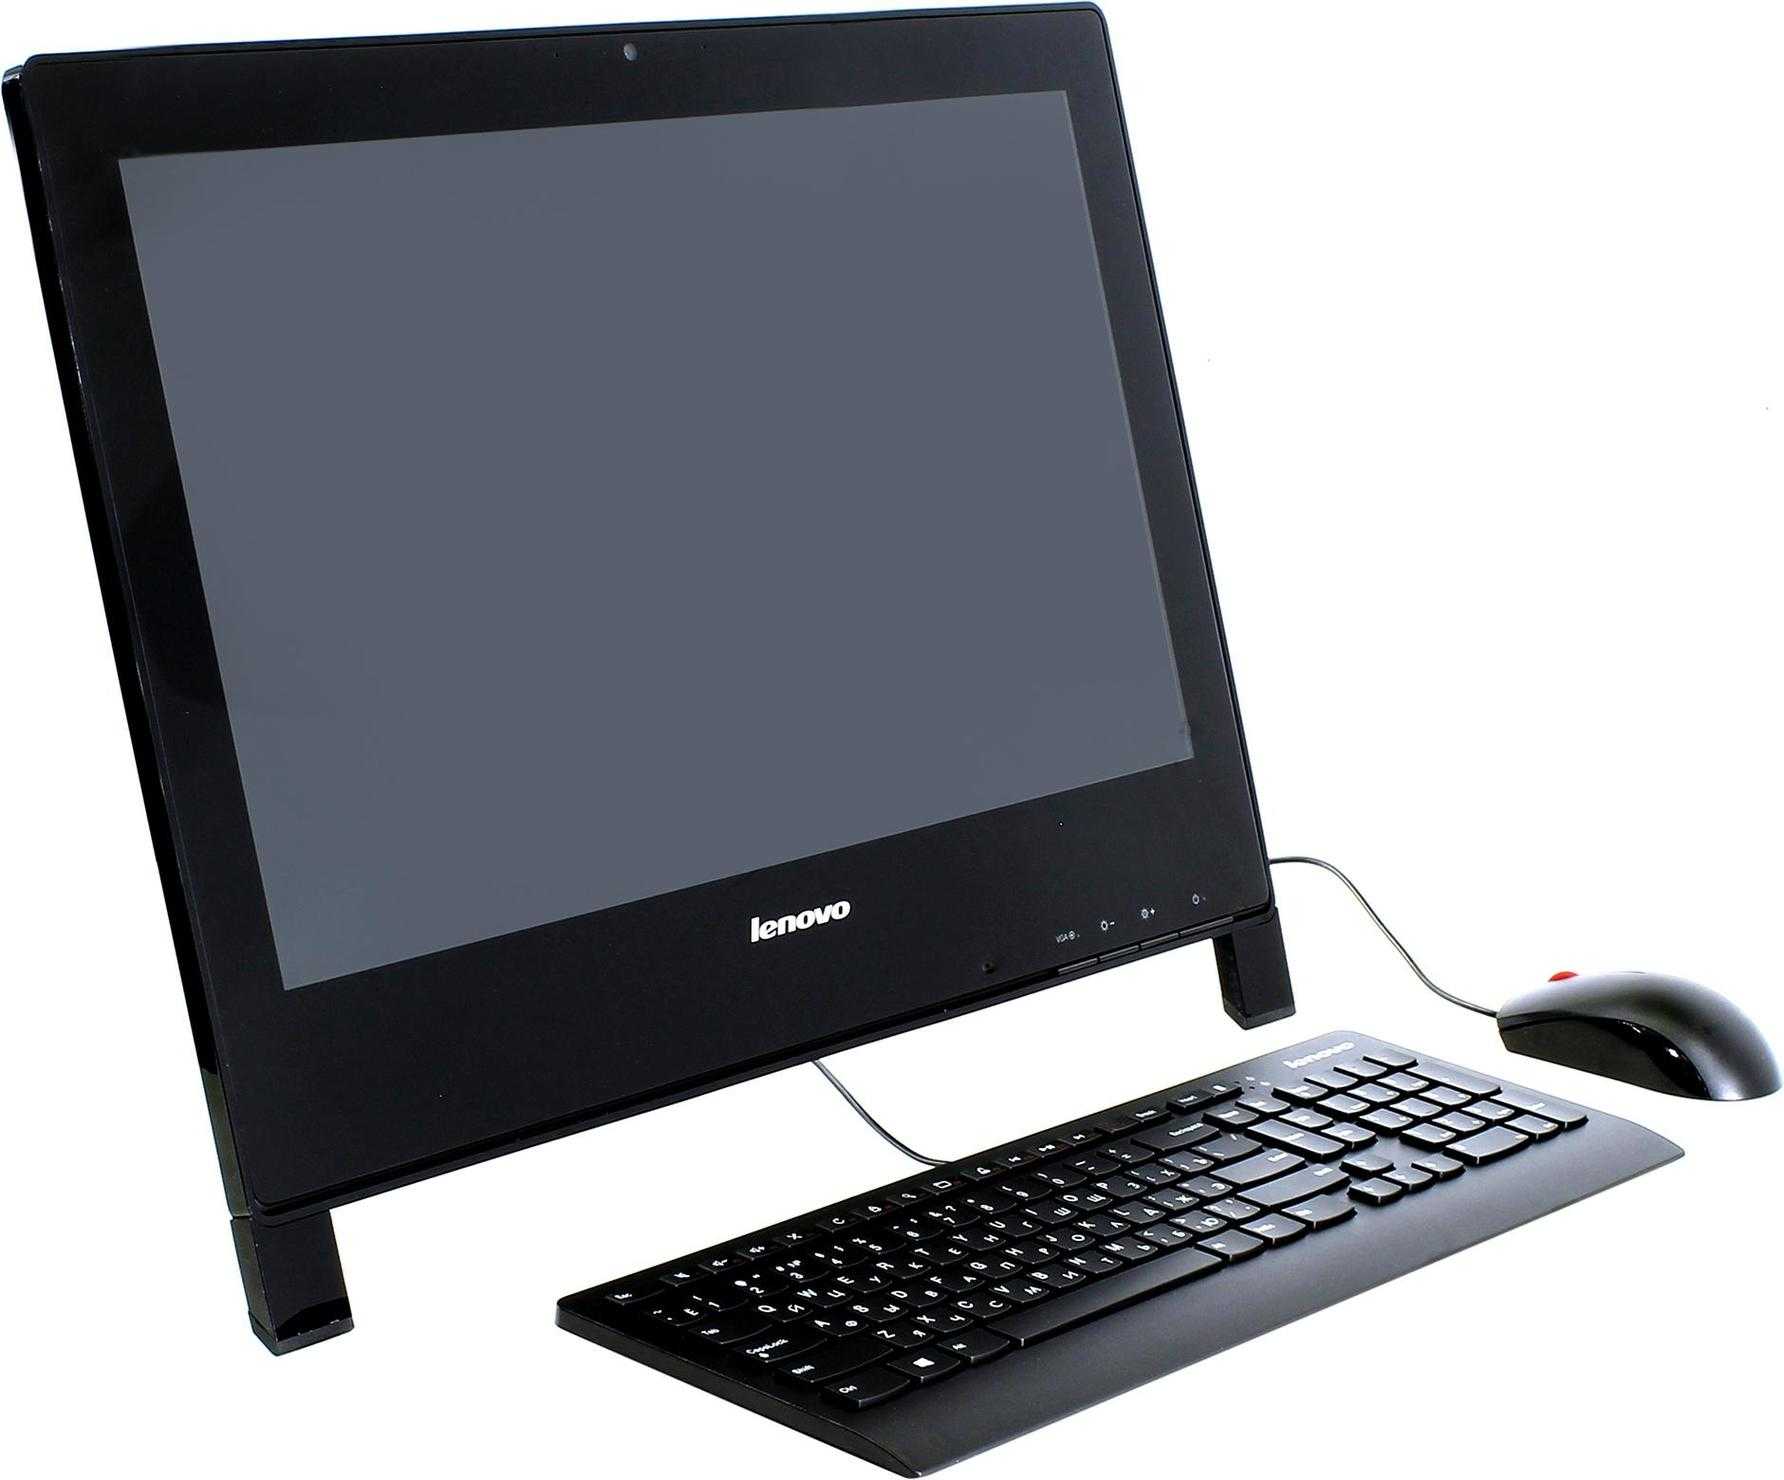 Компьютер lenovo thinkcentre m710s sff — купить, цена и характеристики, отзывы